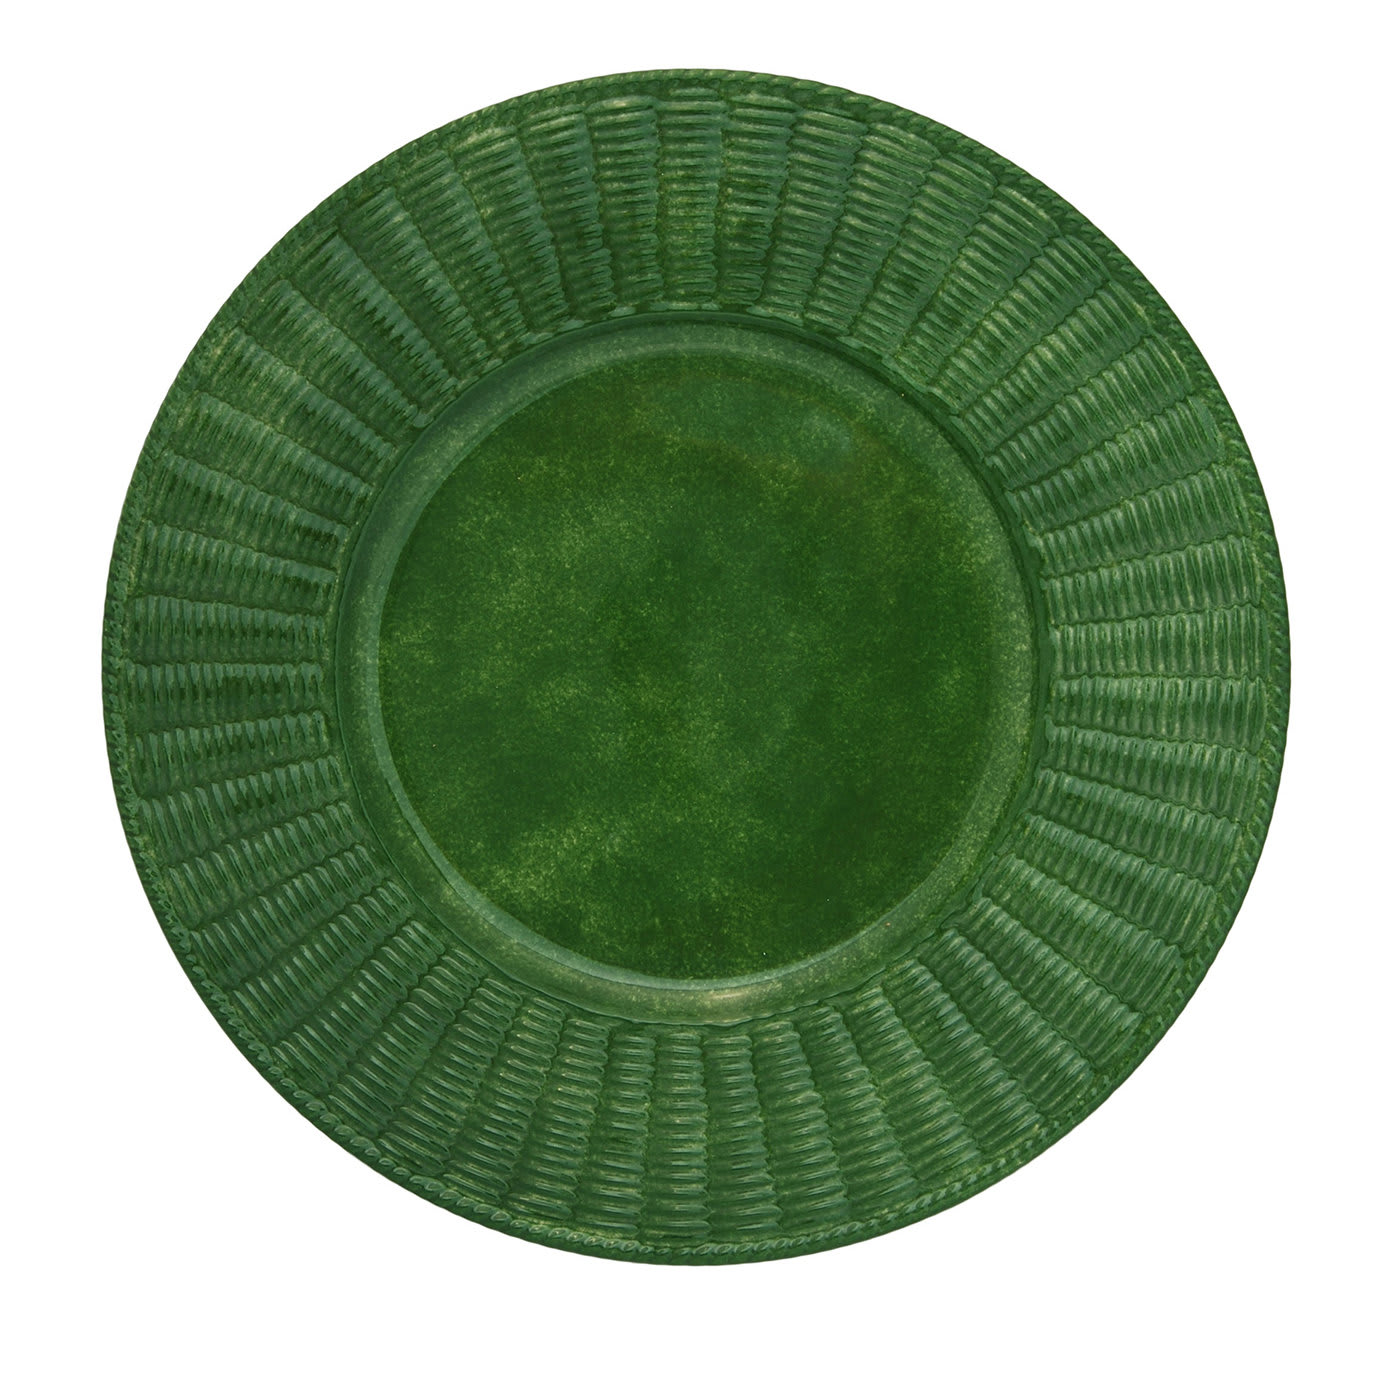 Set of 4 Verde Wicker Ceramic Plates - Este Ceramiche